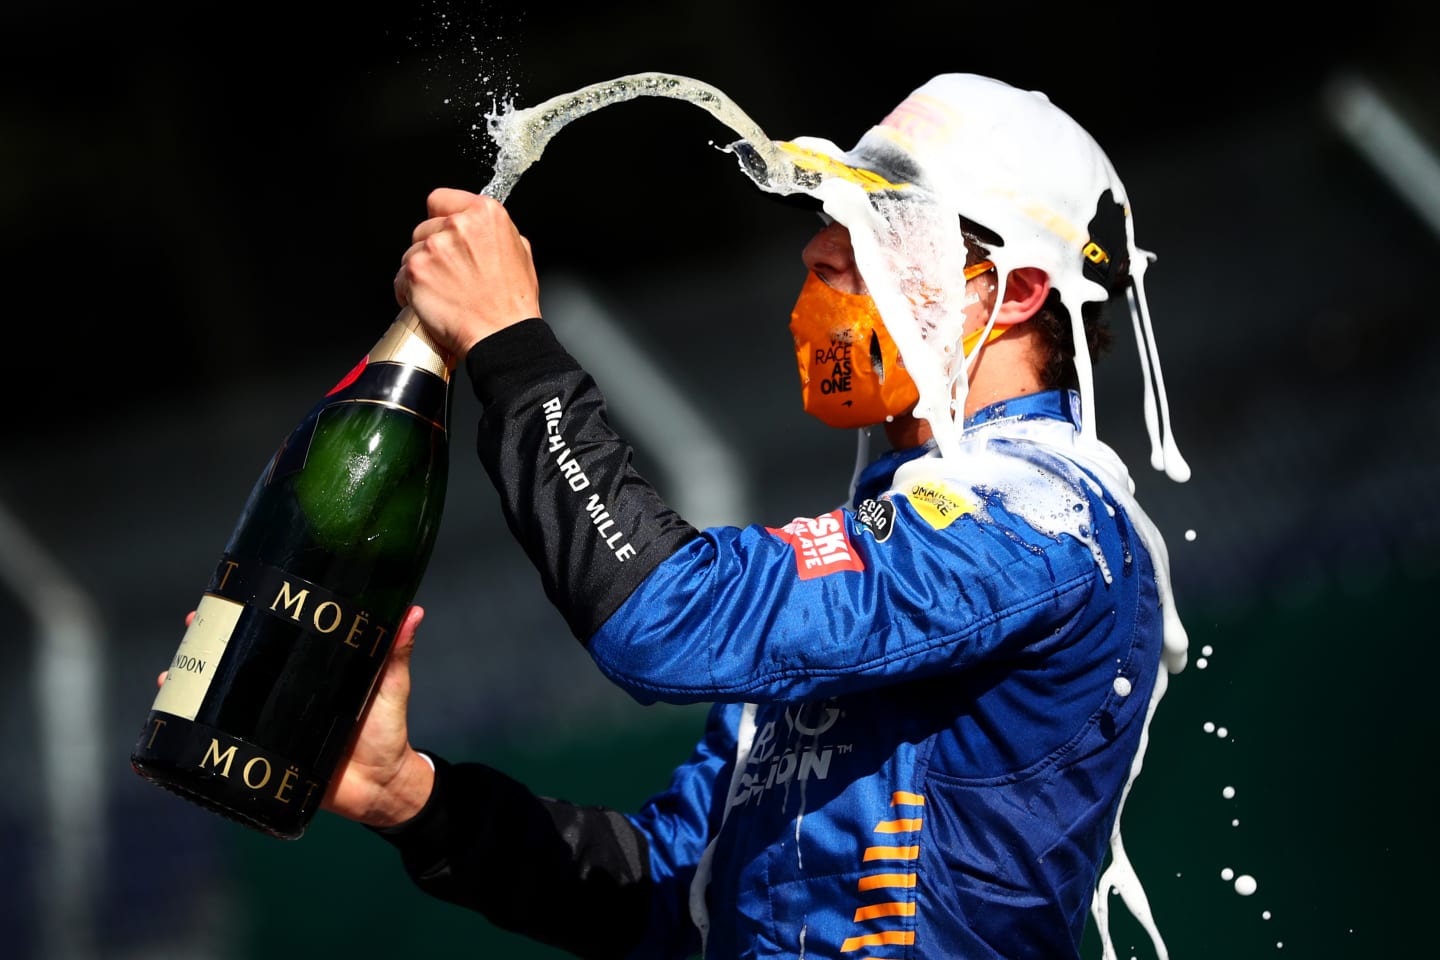 SPIELBERG, AUSTRIA - JULY 05: Third place Lando Norris of Great Britain and McLaren F1 celebrates